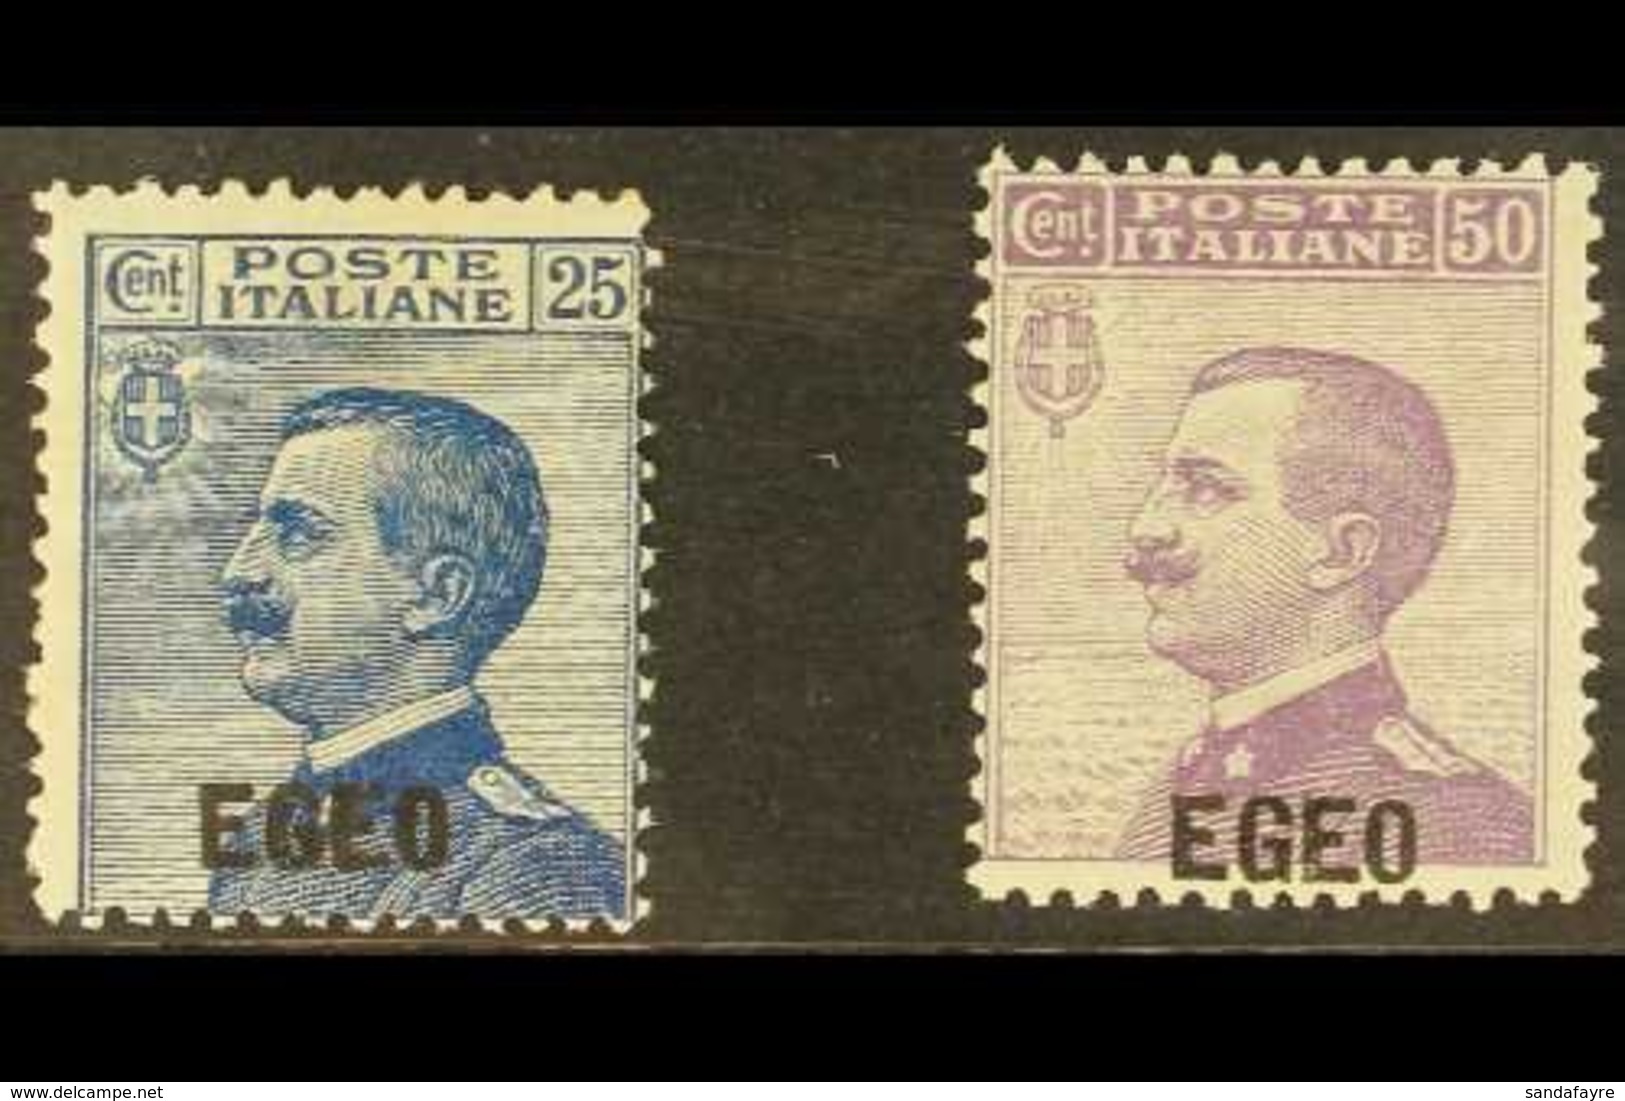 EGEO (DODECANESE ISLANDS) 1912 Overprints Complete Set (SG 1/2, Sassone 1/2), Fine Mint, Fresh. (2 Stamps) For More Imag - Autres & Non Classés